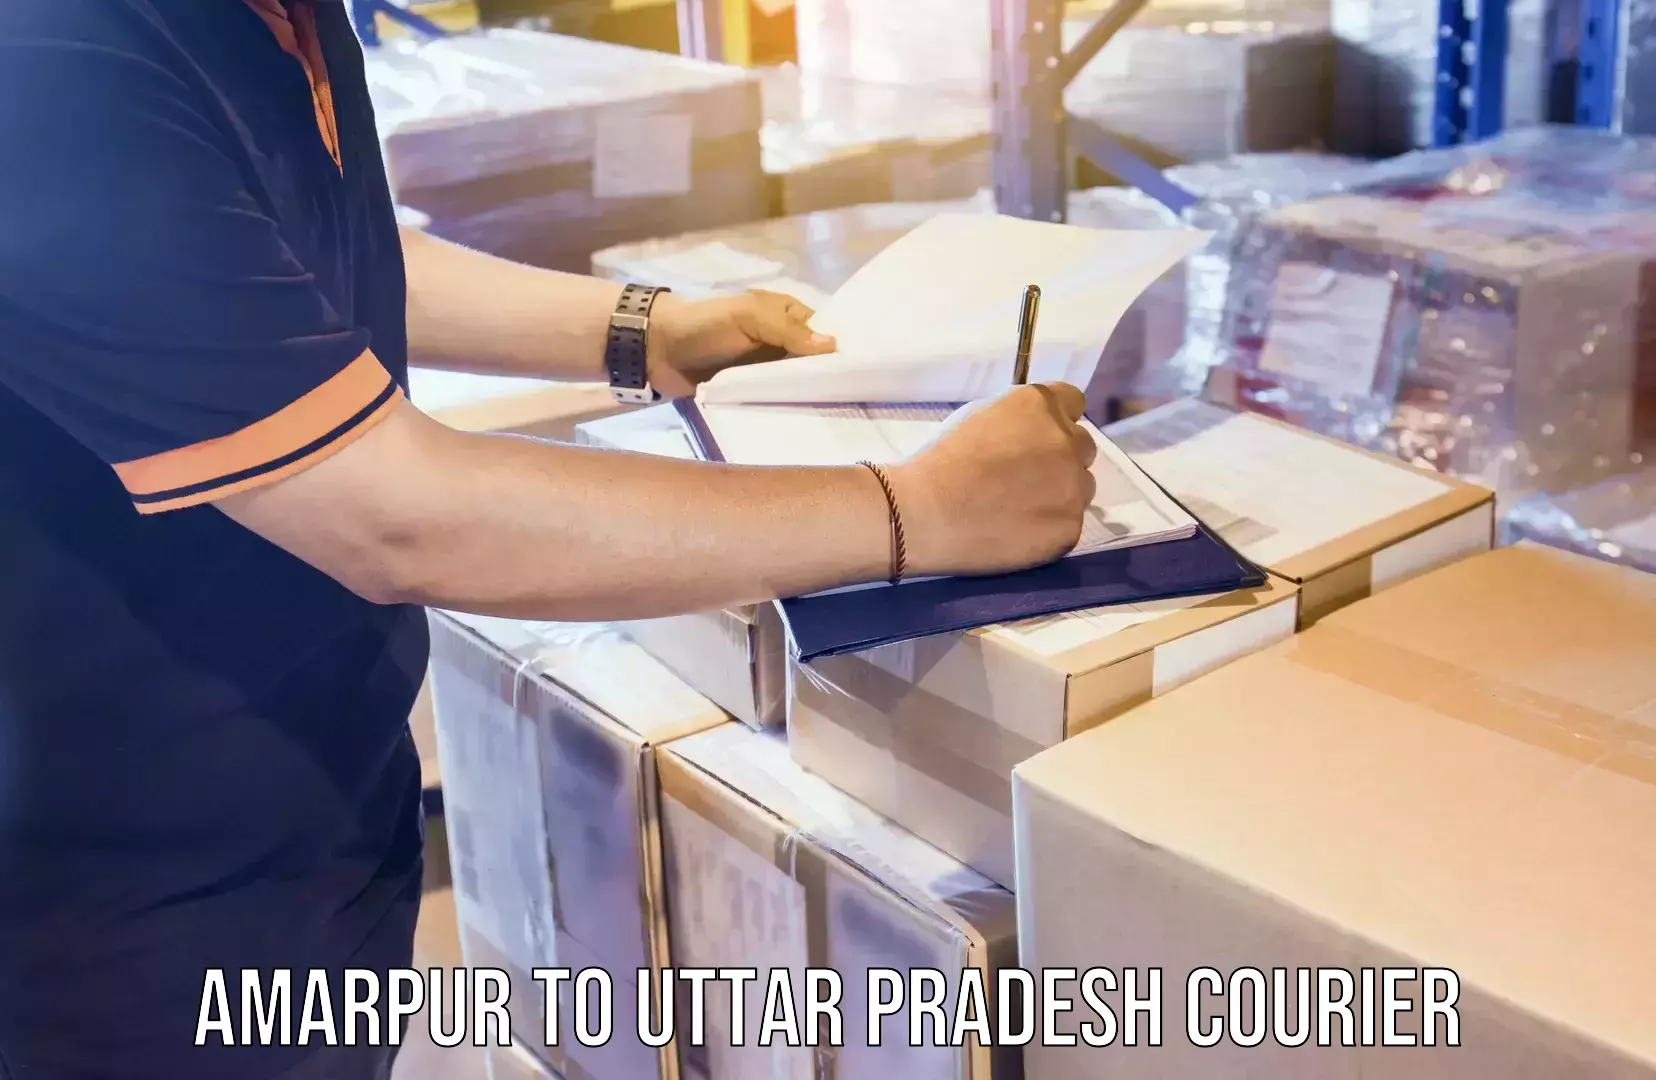 Express delivery network Amarpur to Uttar Pradesh